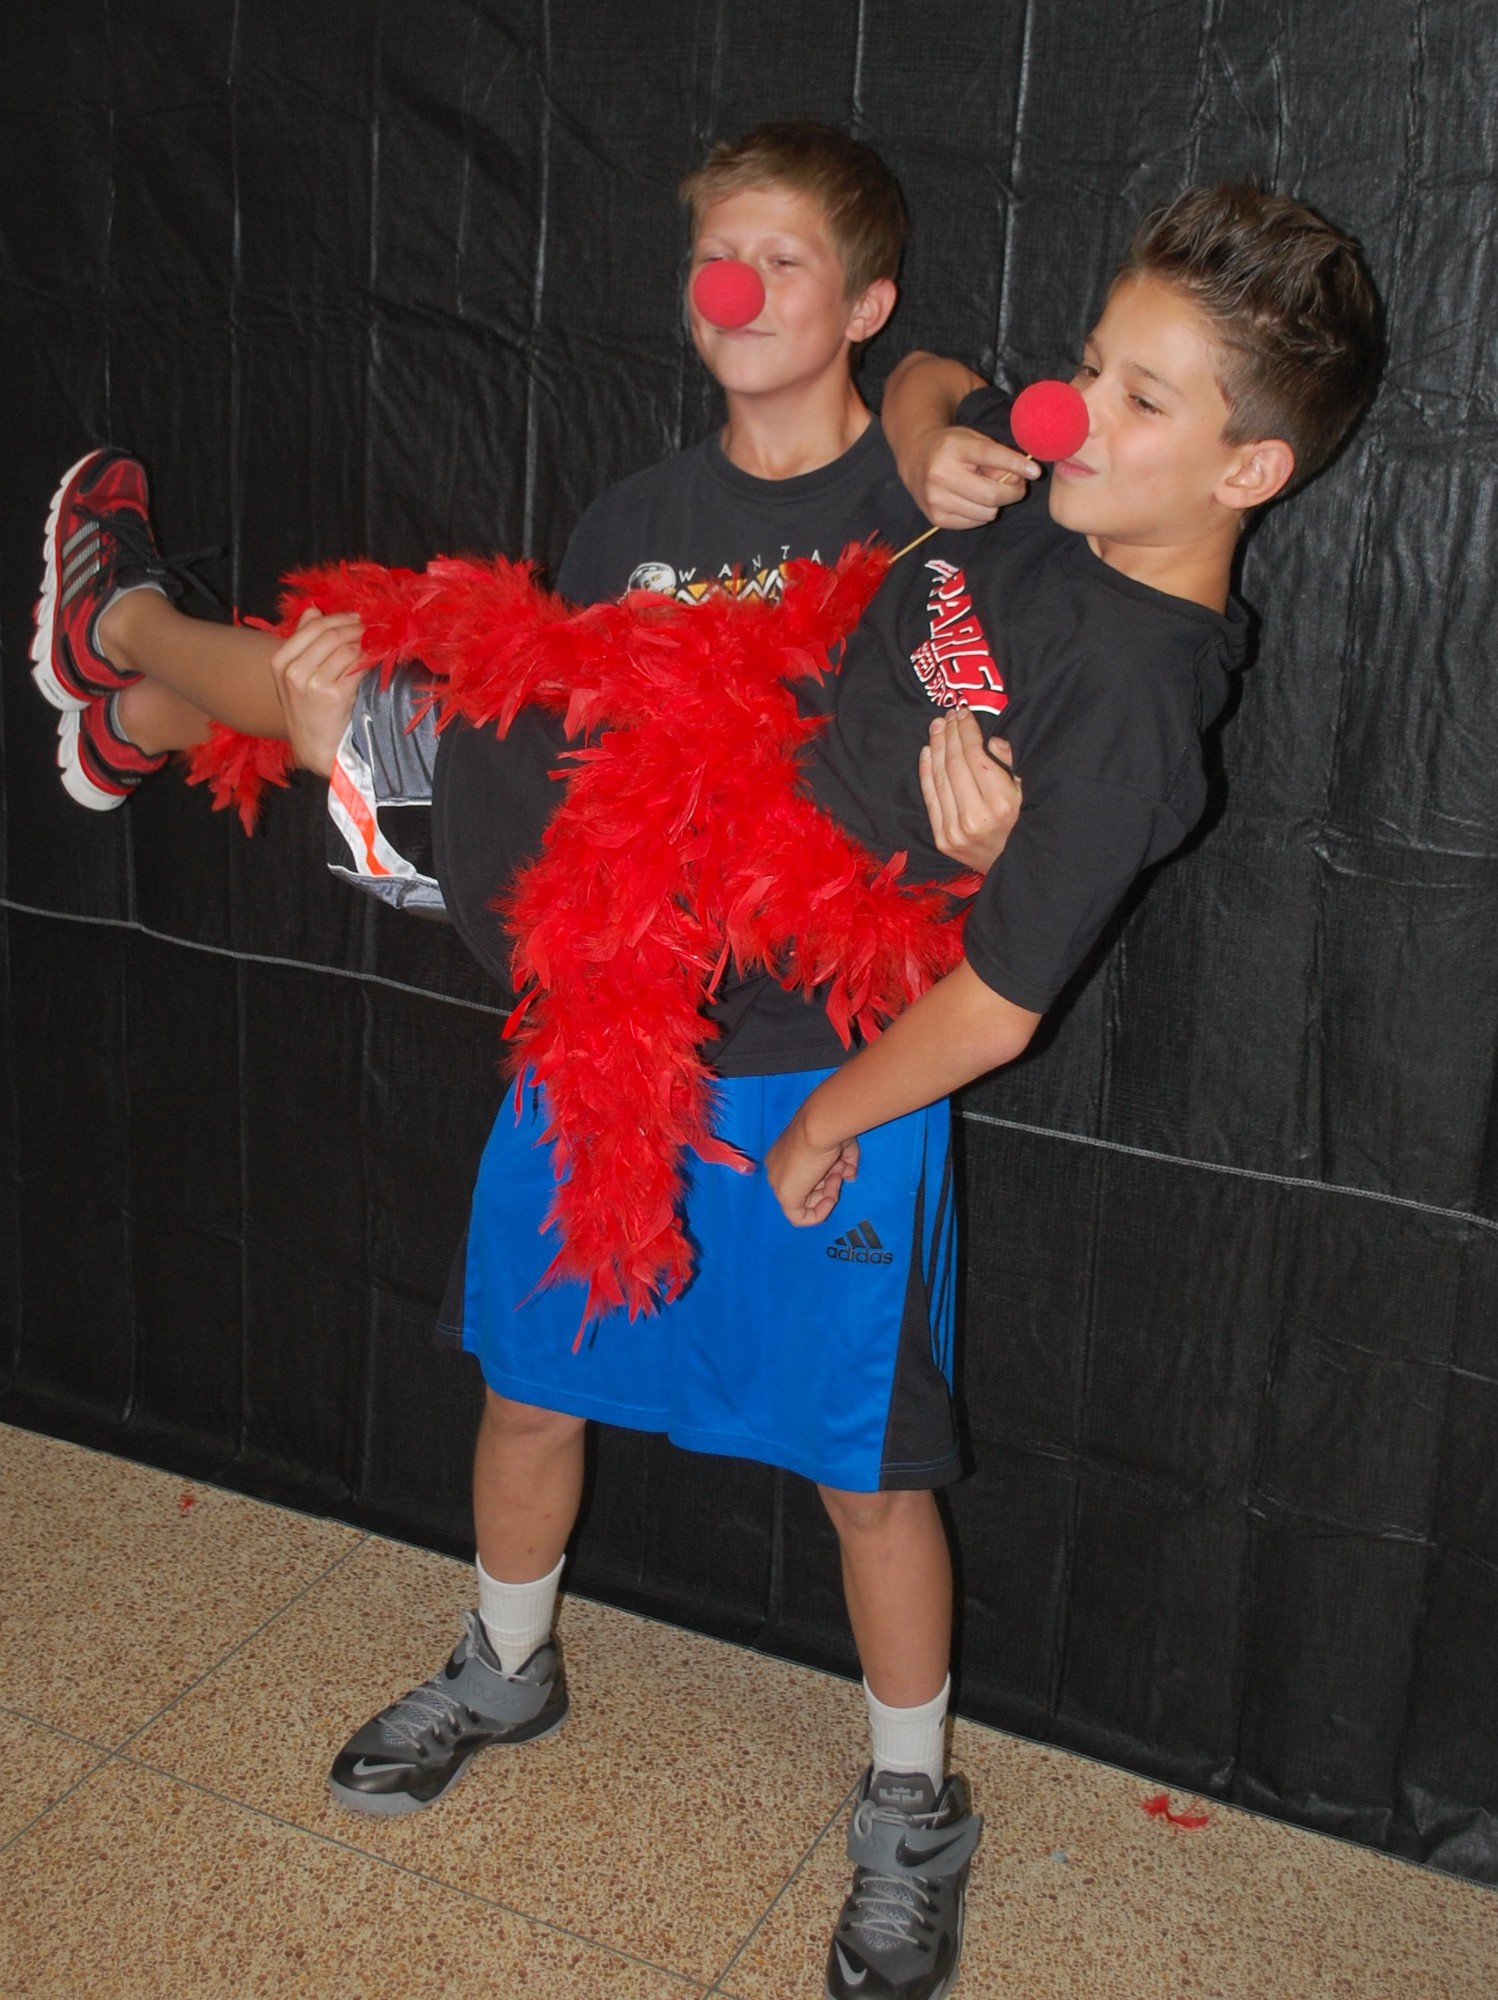 Sixth-graders Chris Barberio and T.J. Cerasi had some fun.